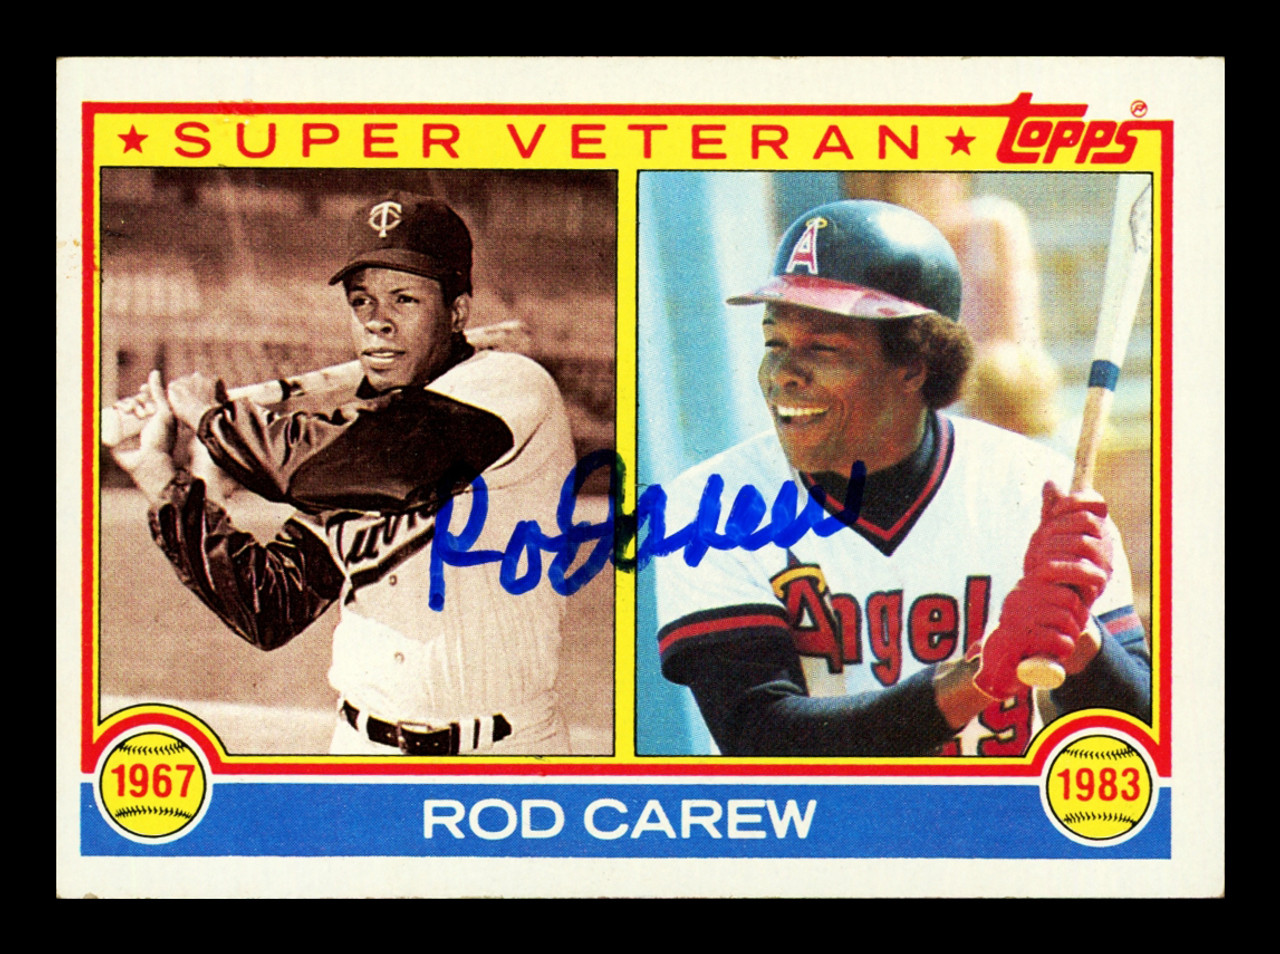 Rod Carew Autographed 1983 Topps Super Veteran Card #201 California Angels  Stock #211305